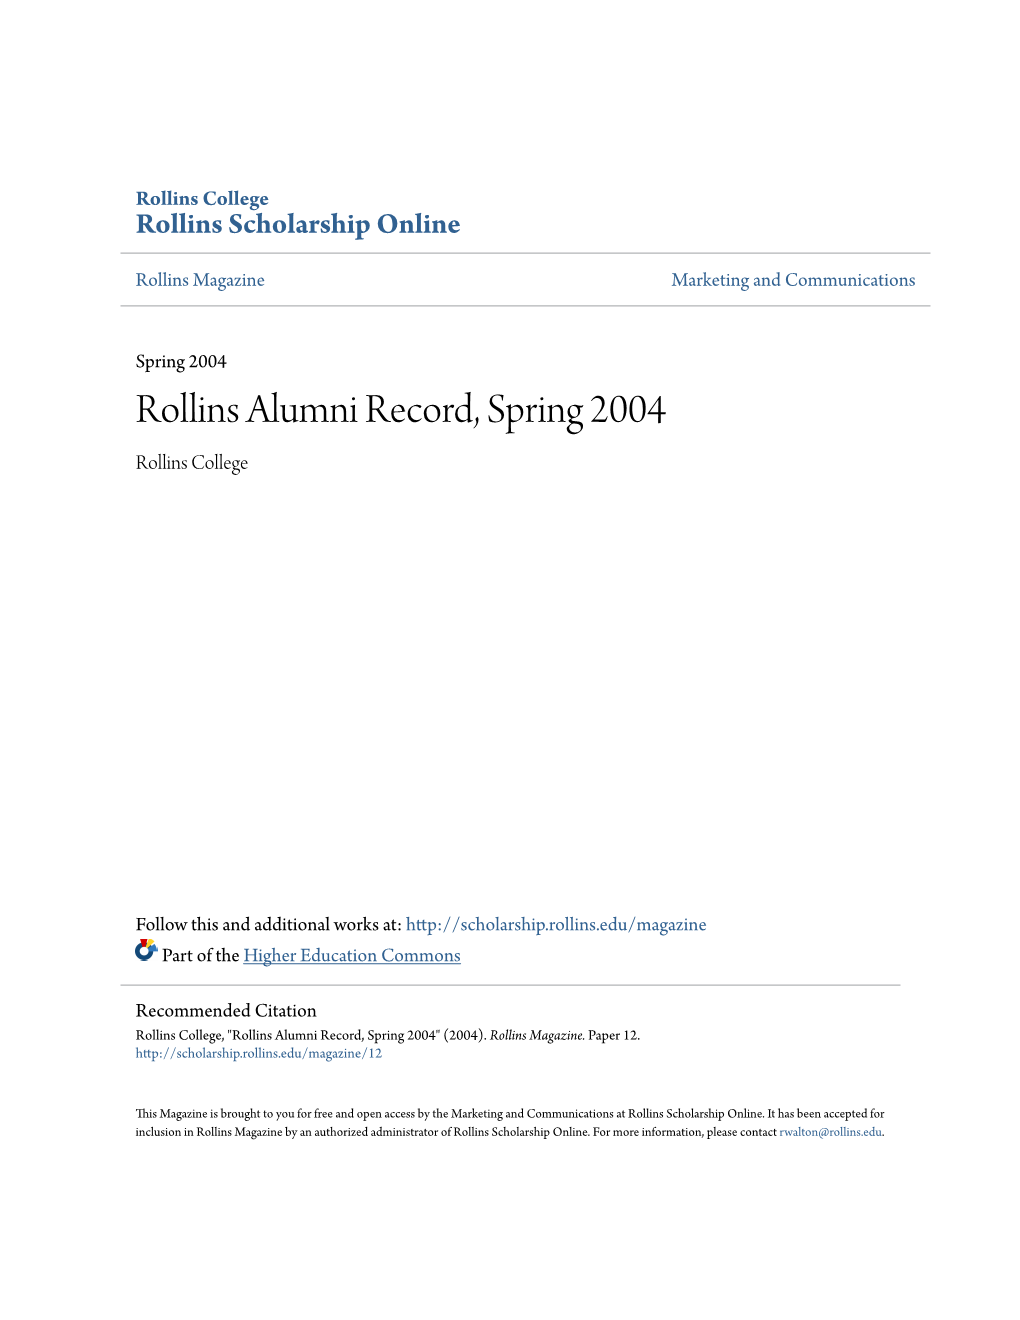 Rollins Alumni Record, Spring 2004 Rollins College